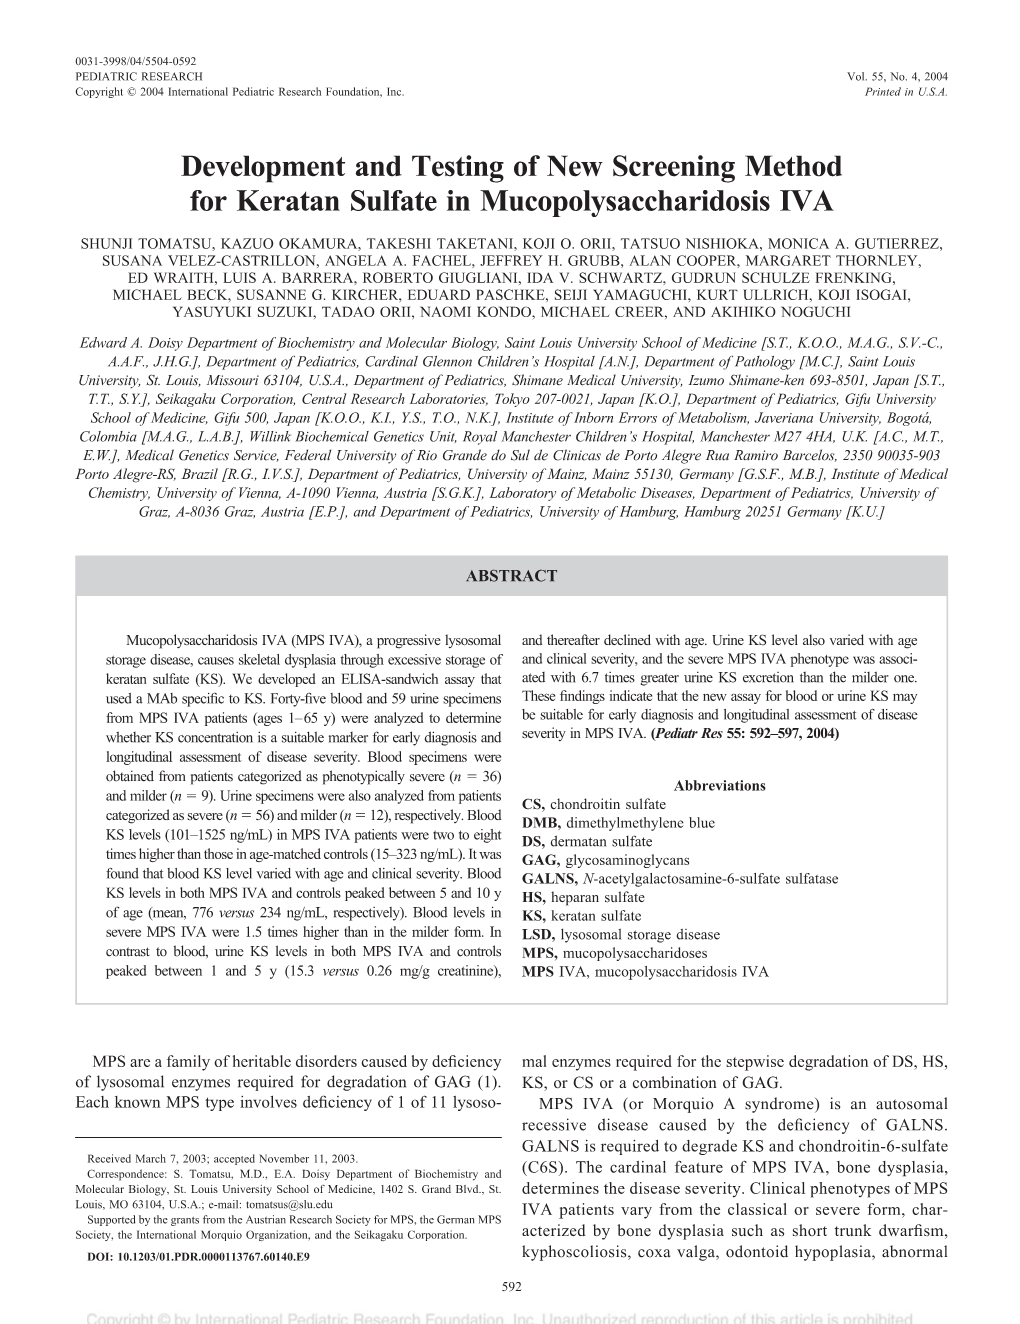 Development and Testing of New Screening Method for Keratan Sulfate in Mucopolysaccharidosis IVA